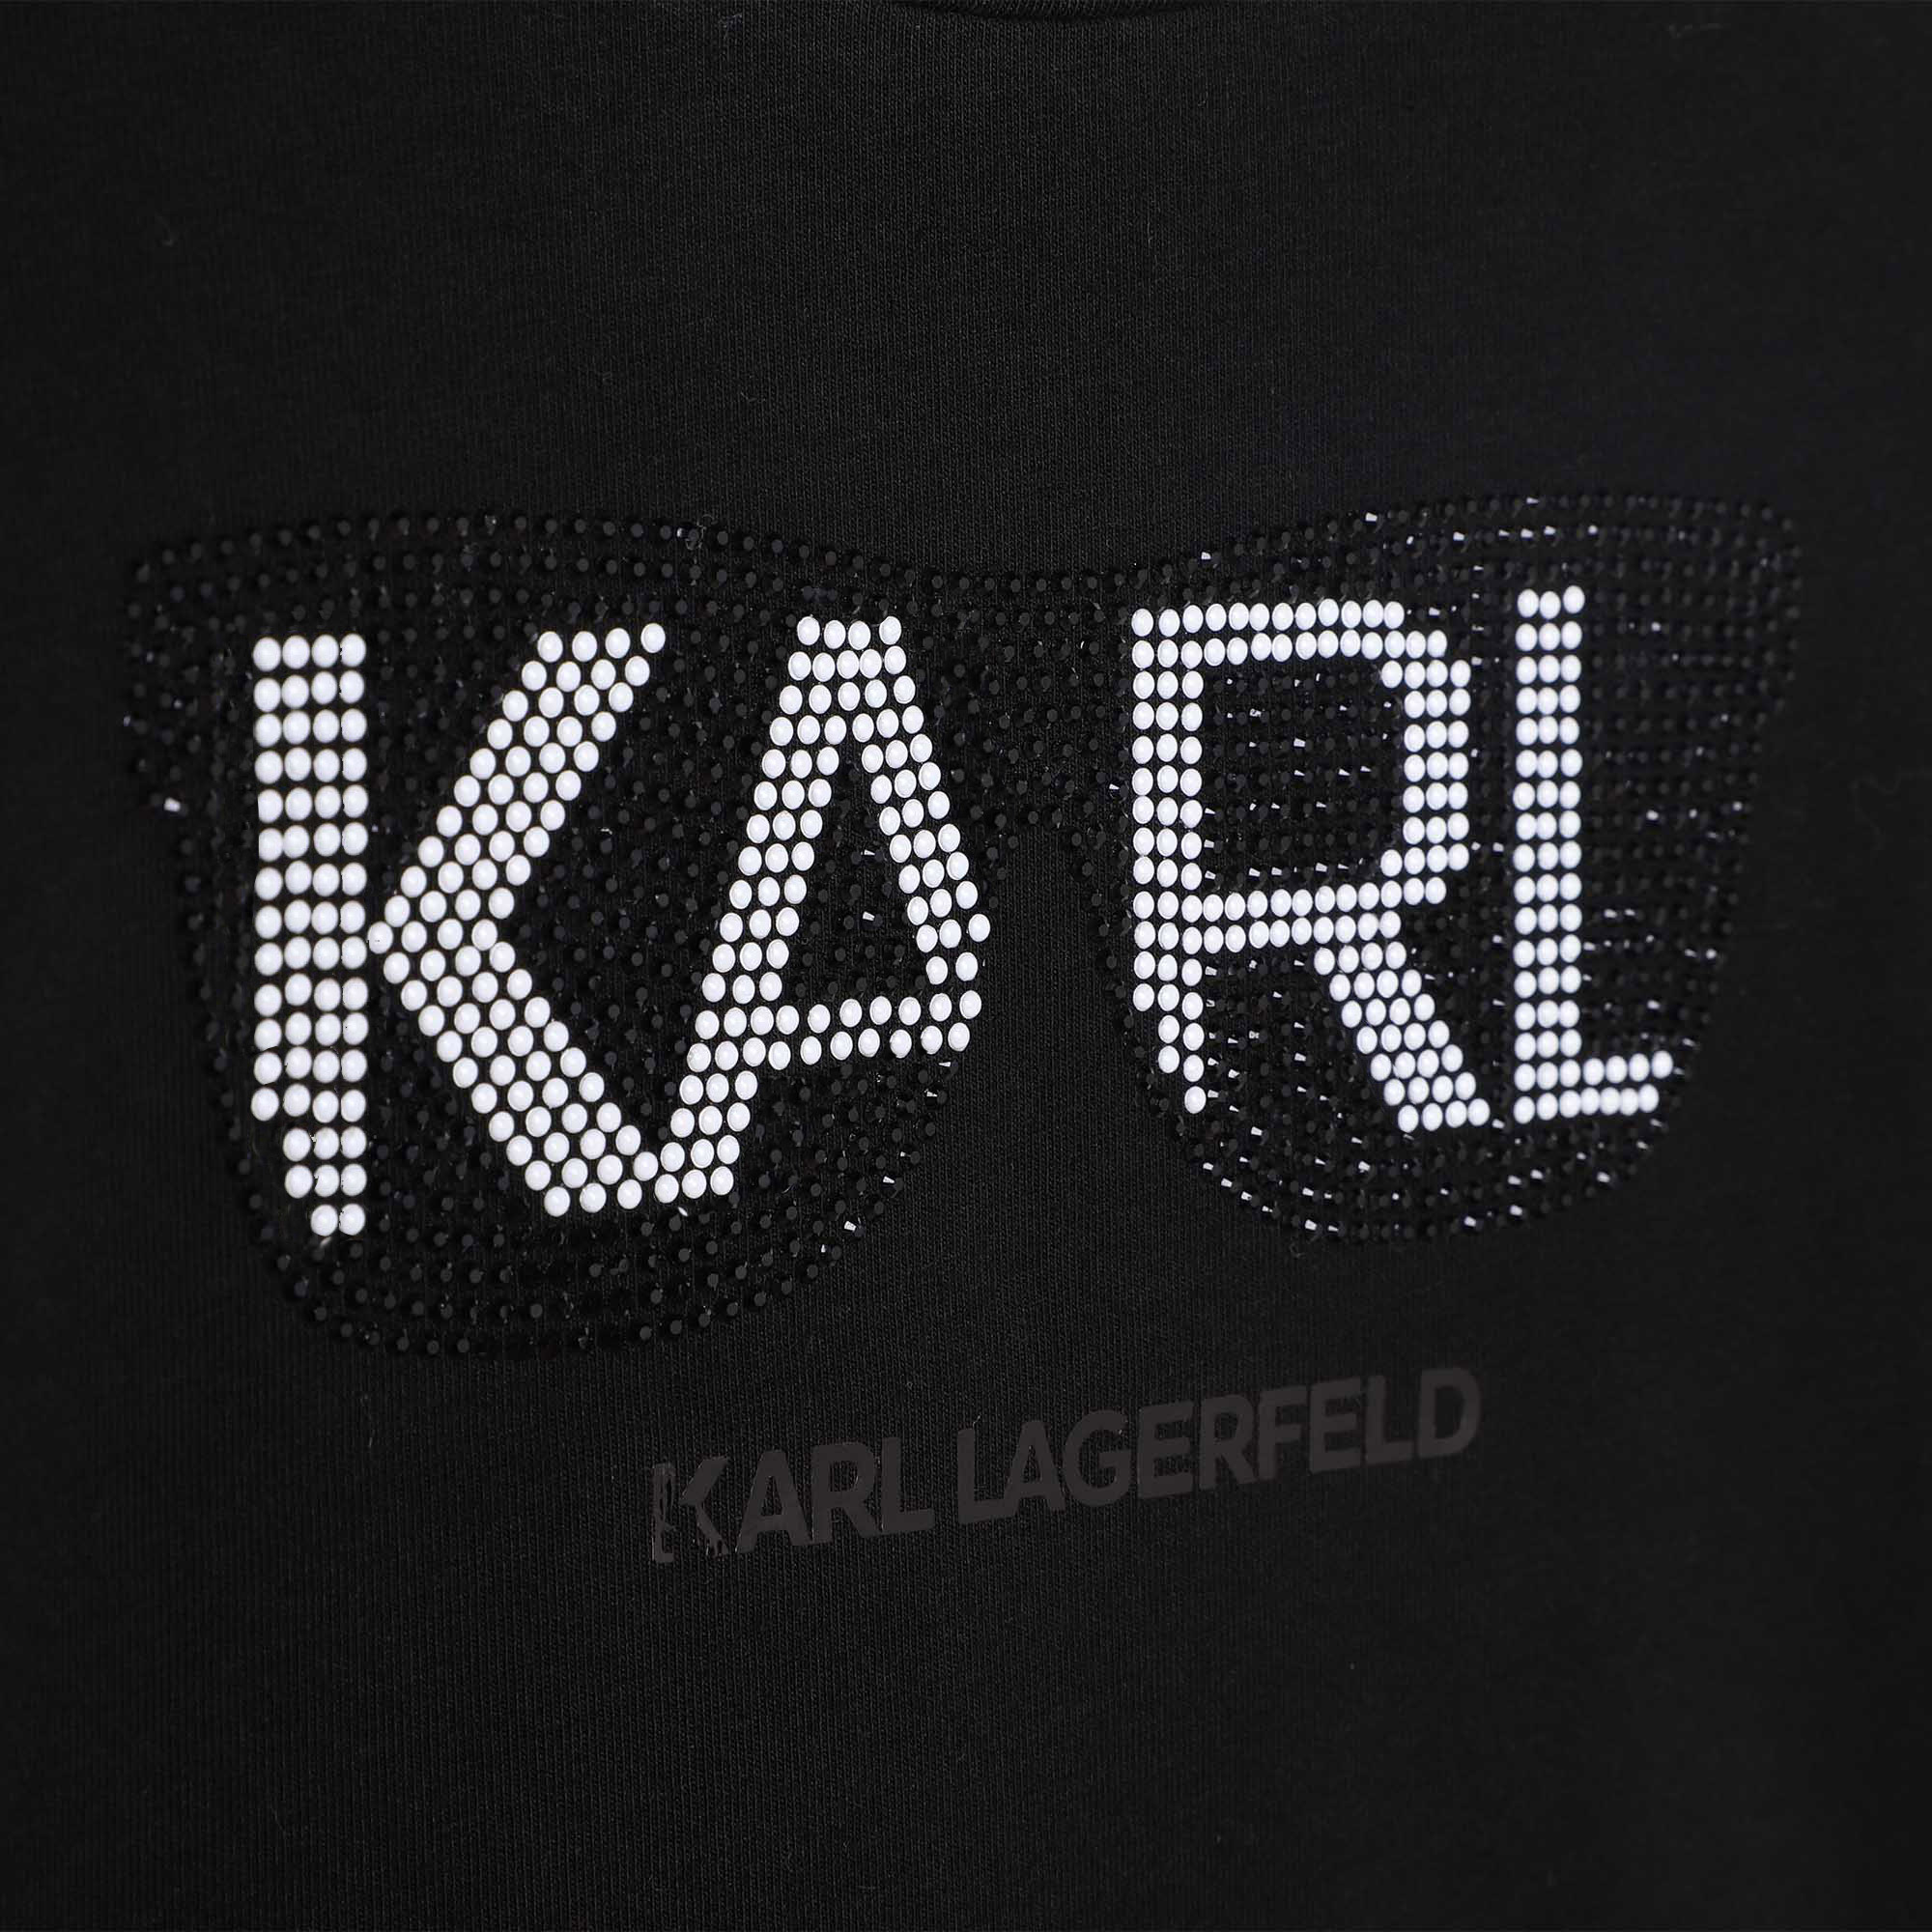 Katoenen T-shirt lange mouwen KARL LAGERFELD KIDS Voor